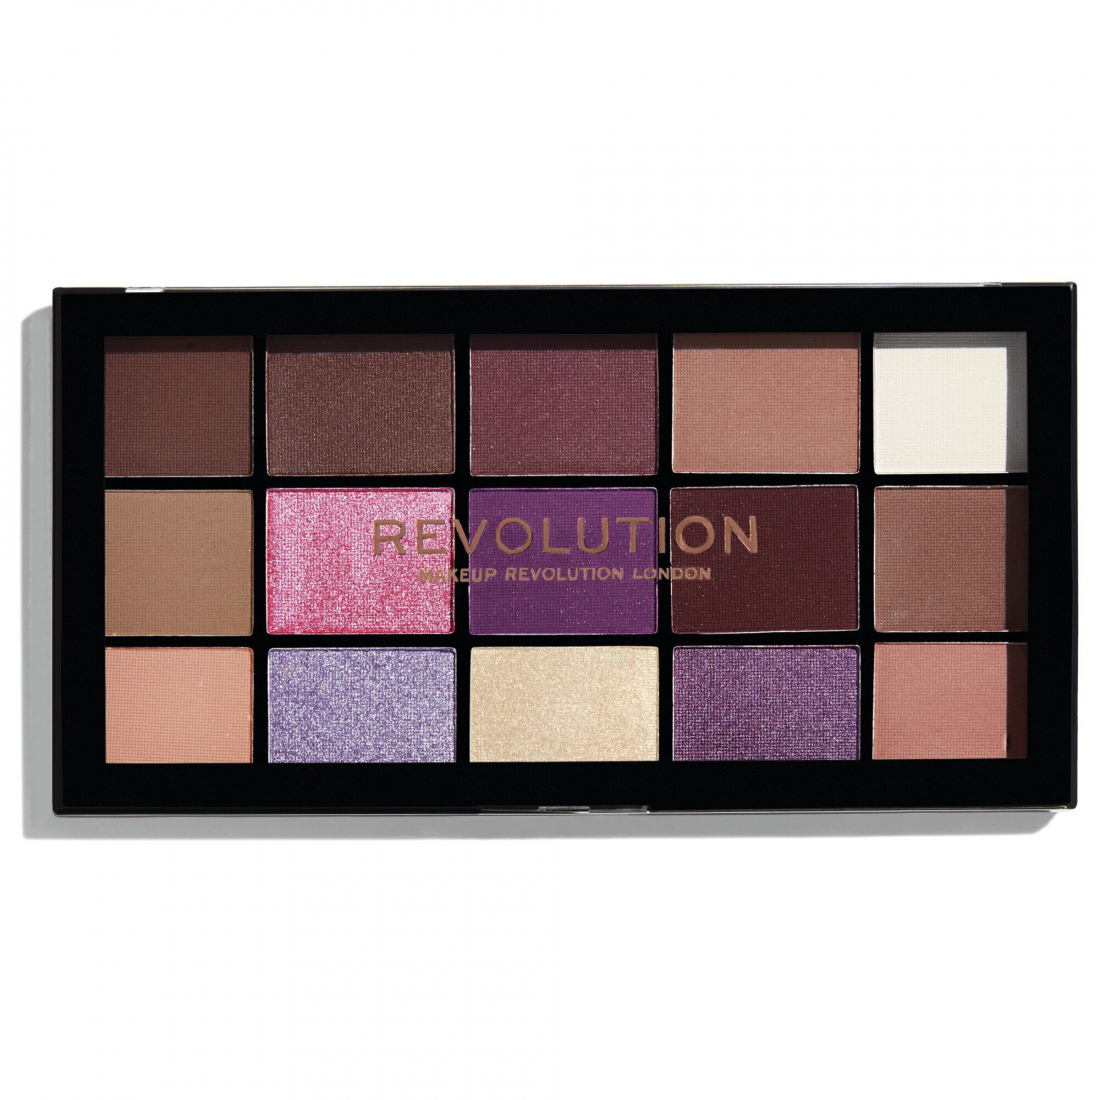 'Reloaded' Eyeshadow Palette - Visionary 16.5 g